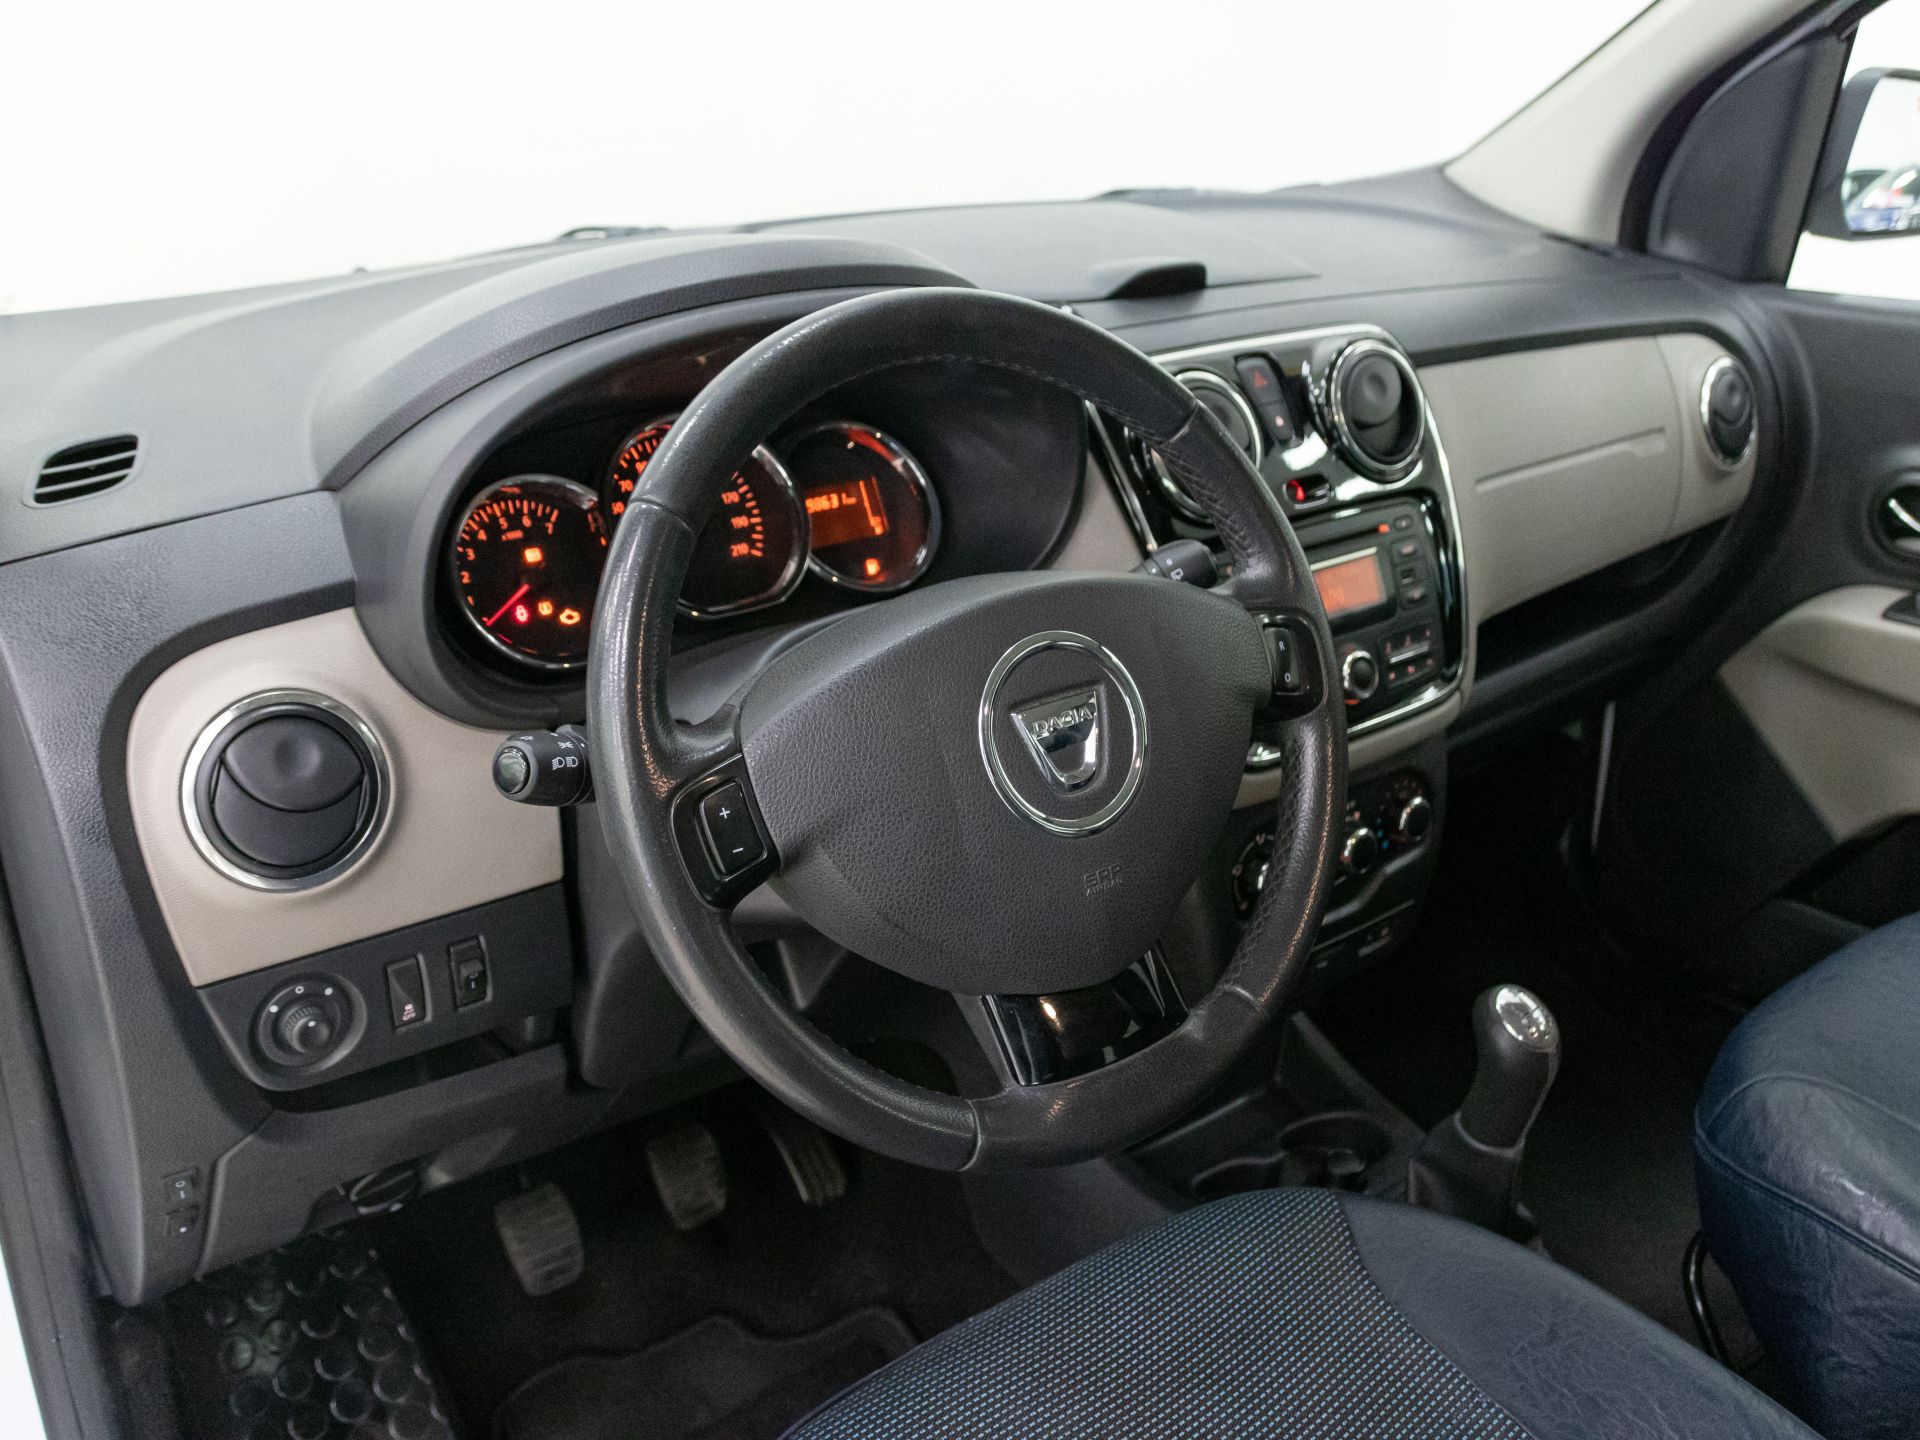 Dacia Lodgy Ambiance dCi 90 EU6 5 pl